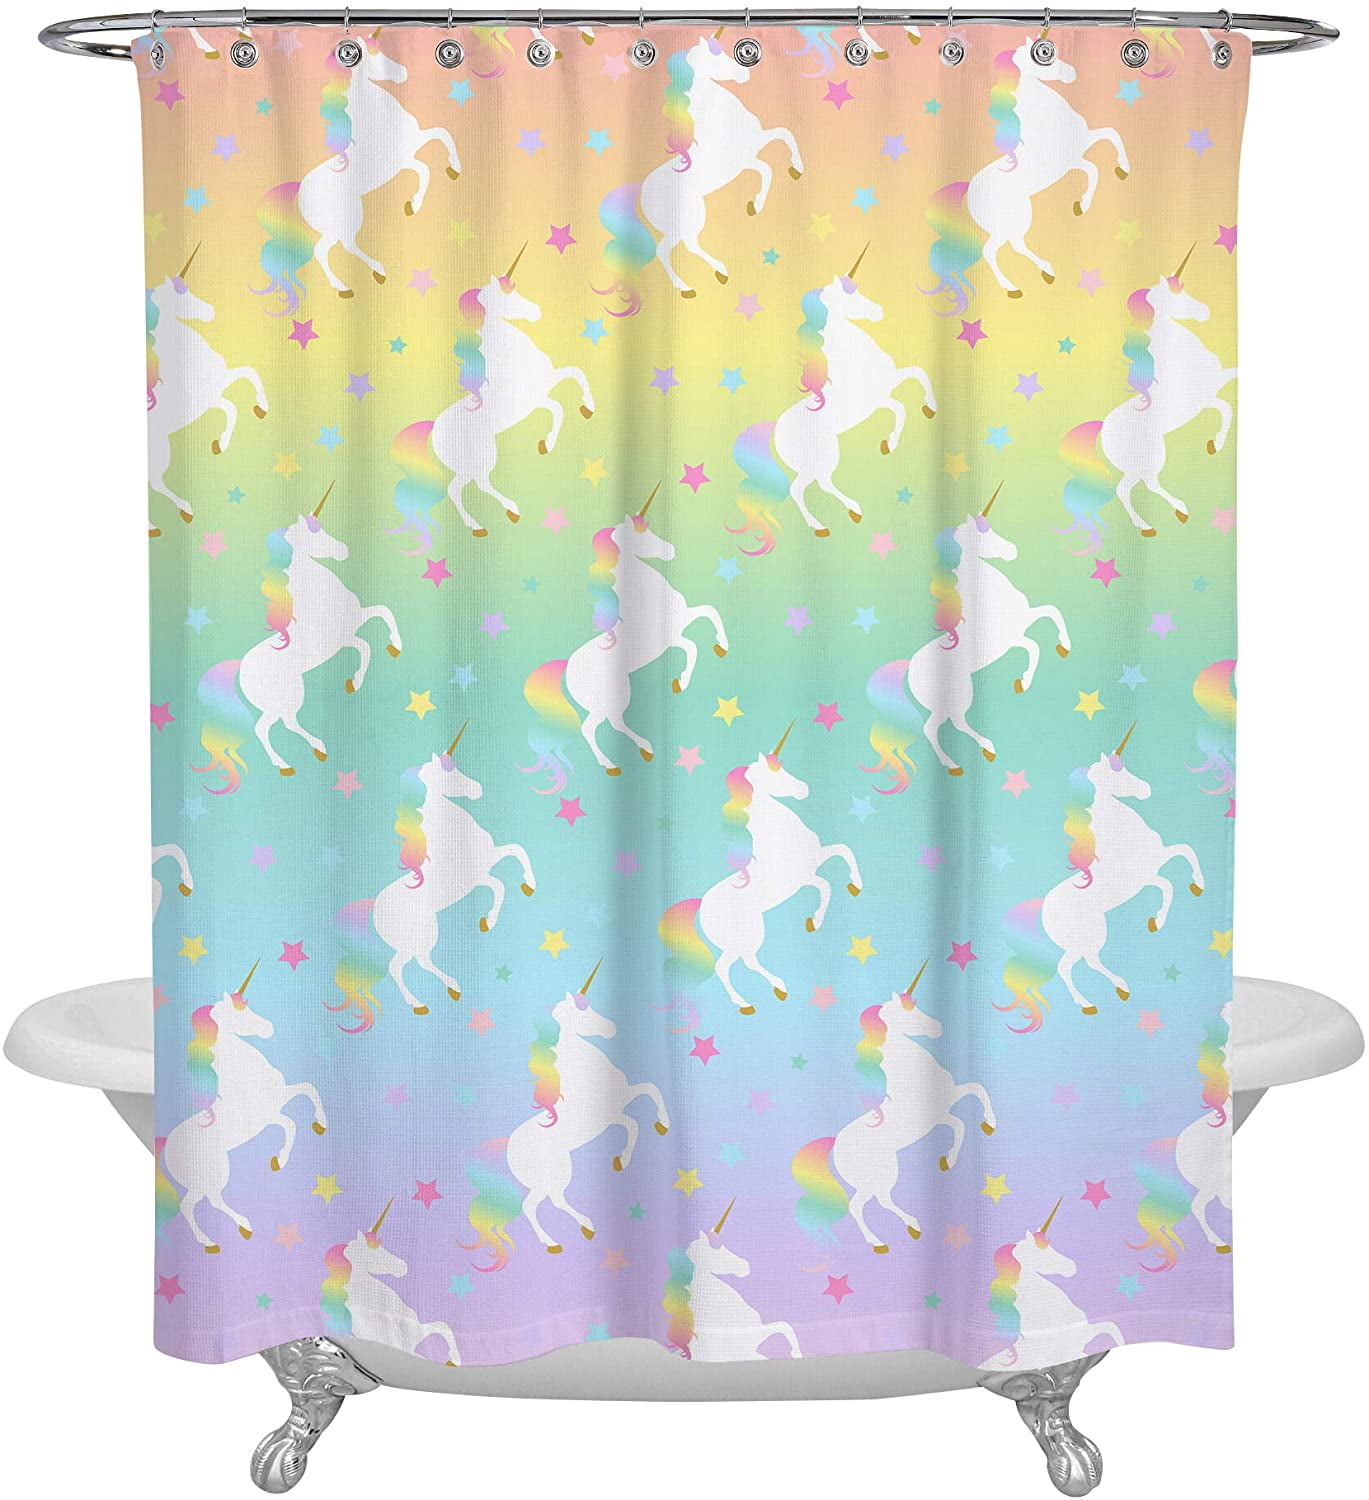 Magic Rainbow Cloud Shower Curtain Liner Set Polyester Fabric Bathroom Accessory 